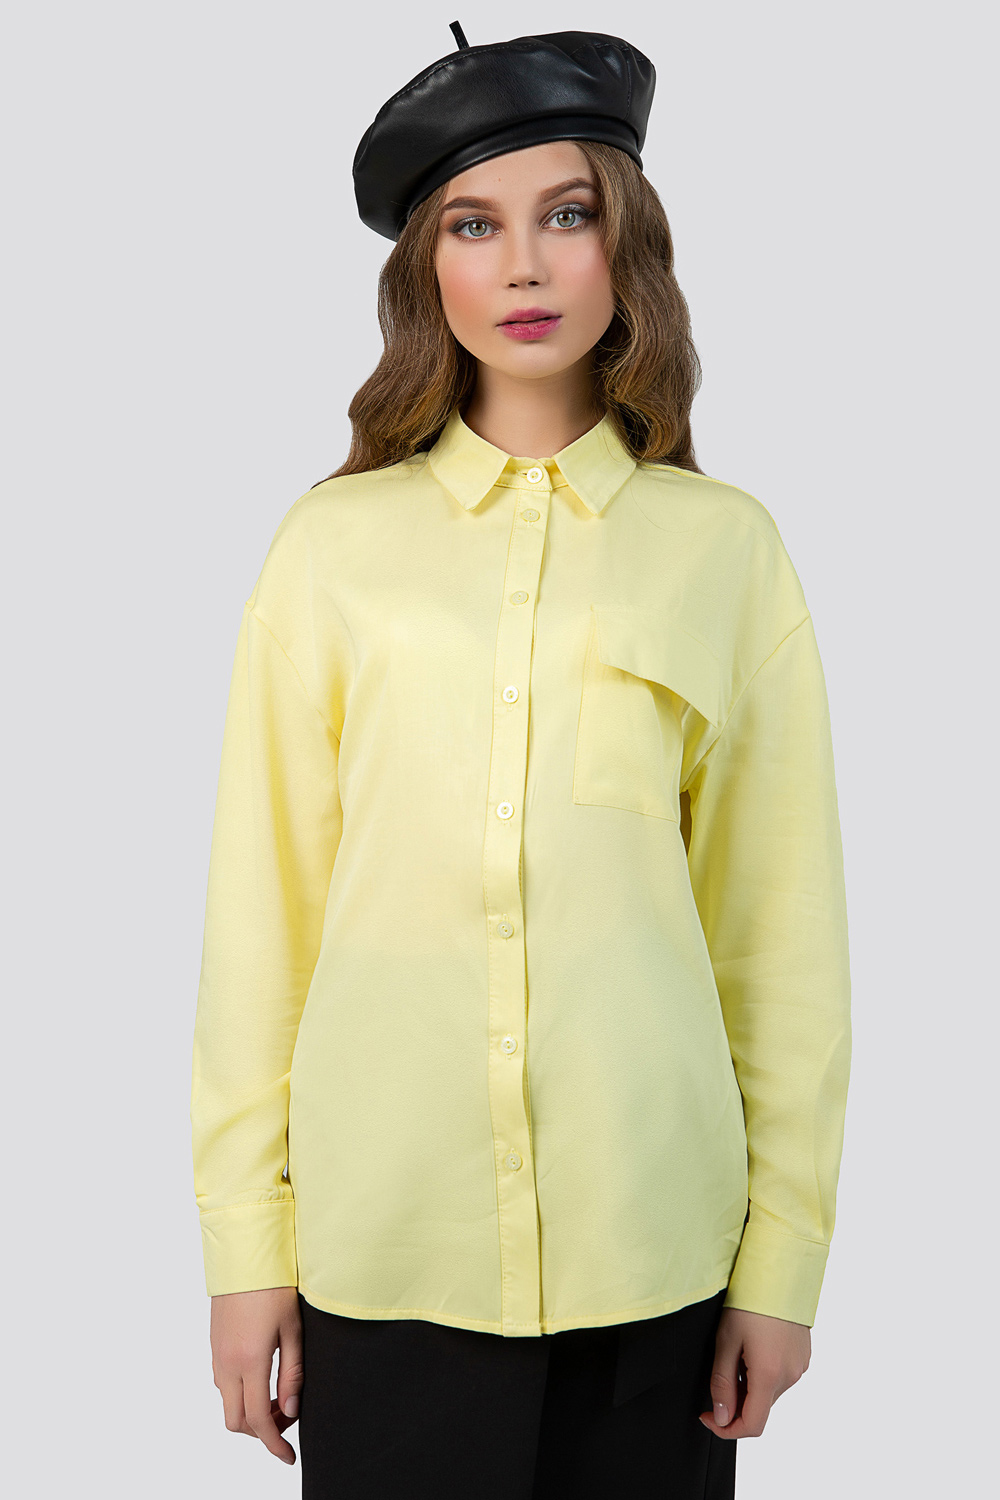 Loose fitting yellow shirt